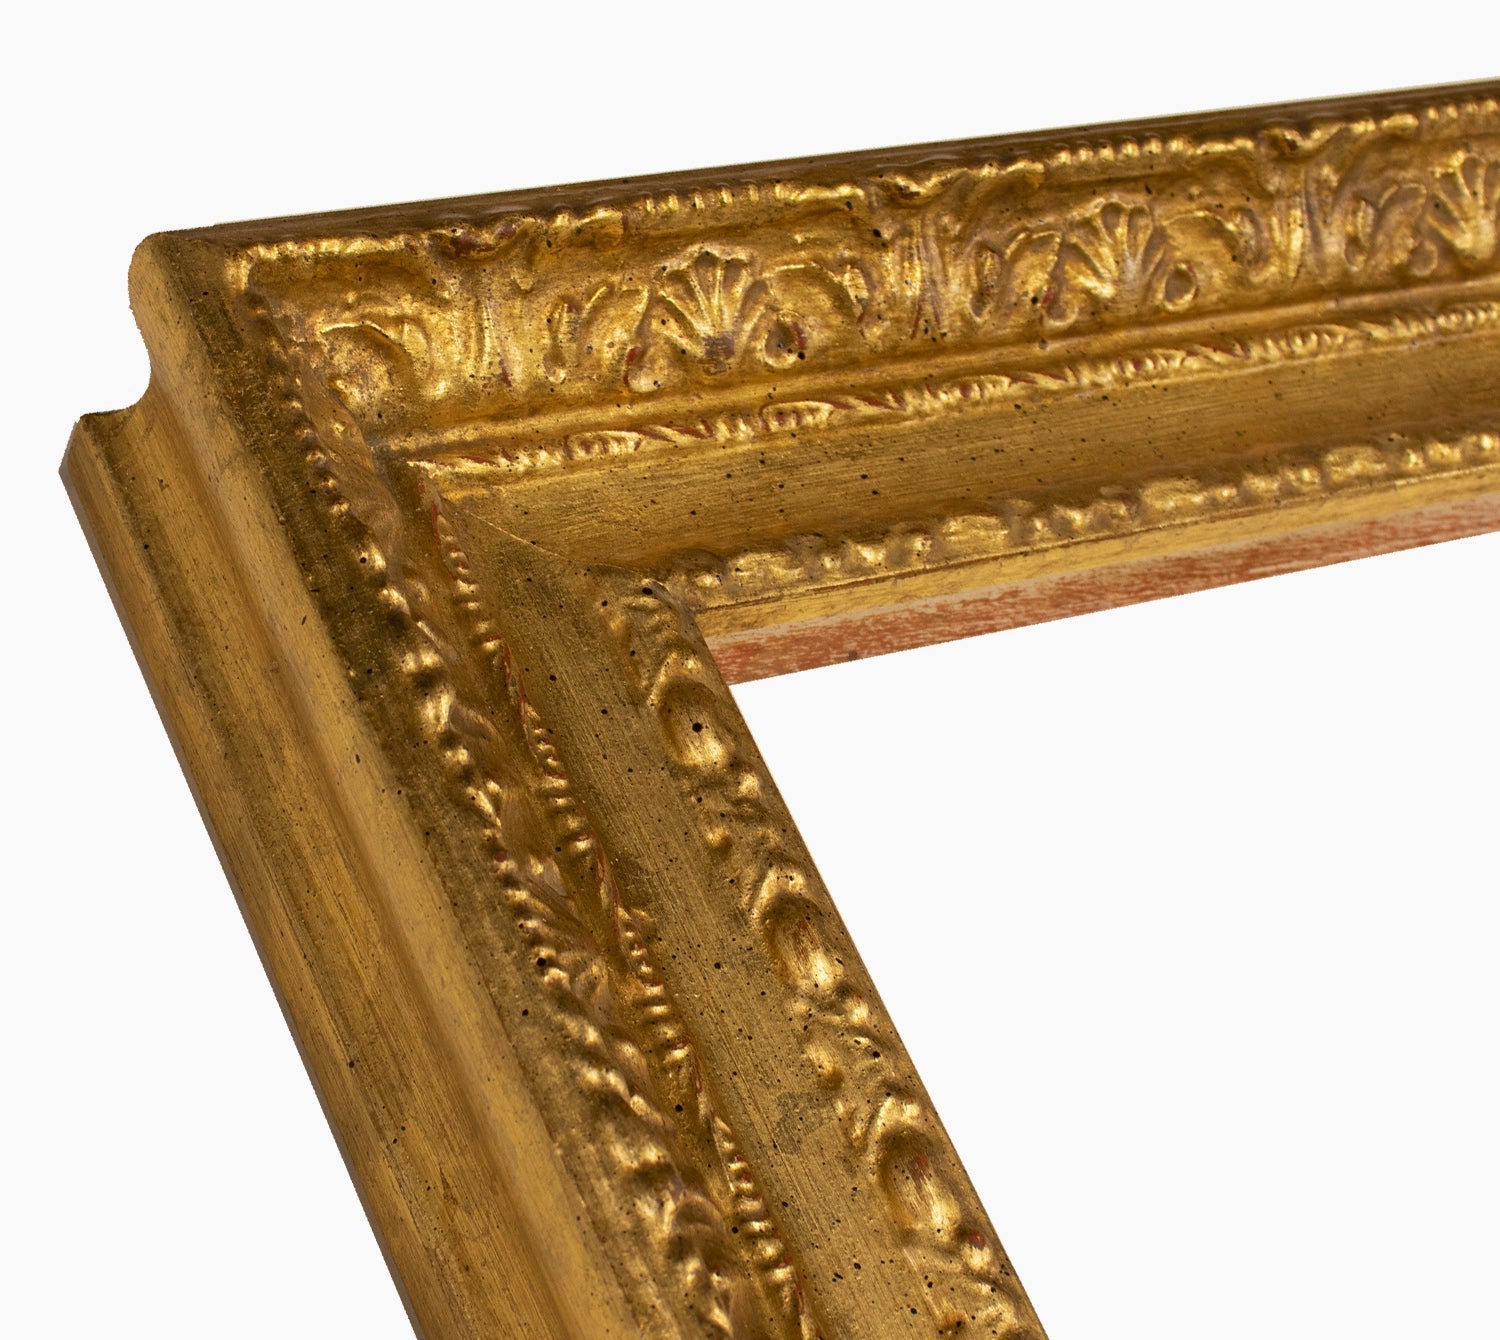 643.010 cadre en bois à la feuille d'or mesure de profil 65x55 mm Lombarda cornici S.n.c.